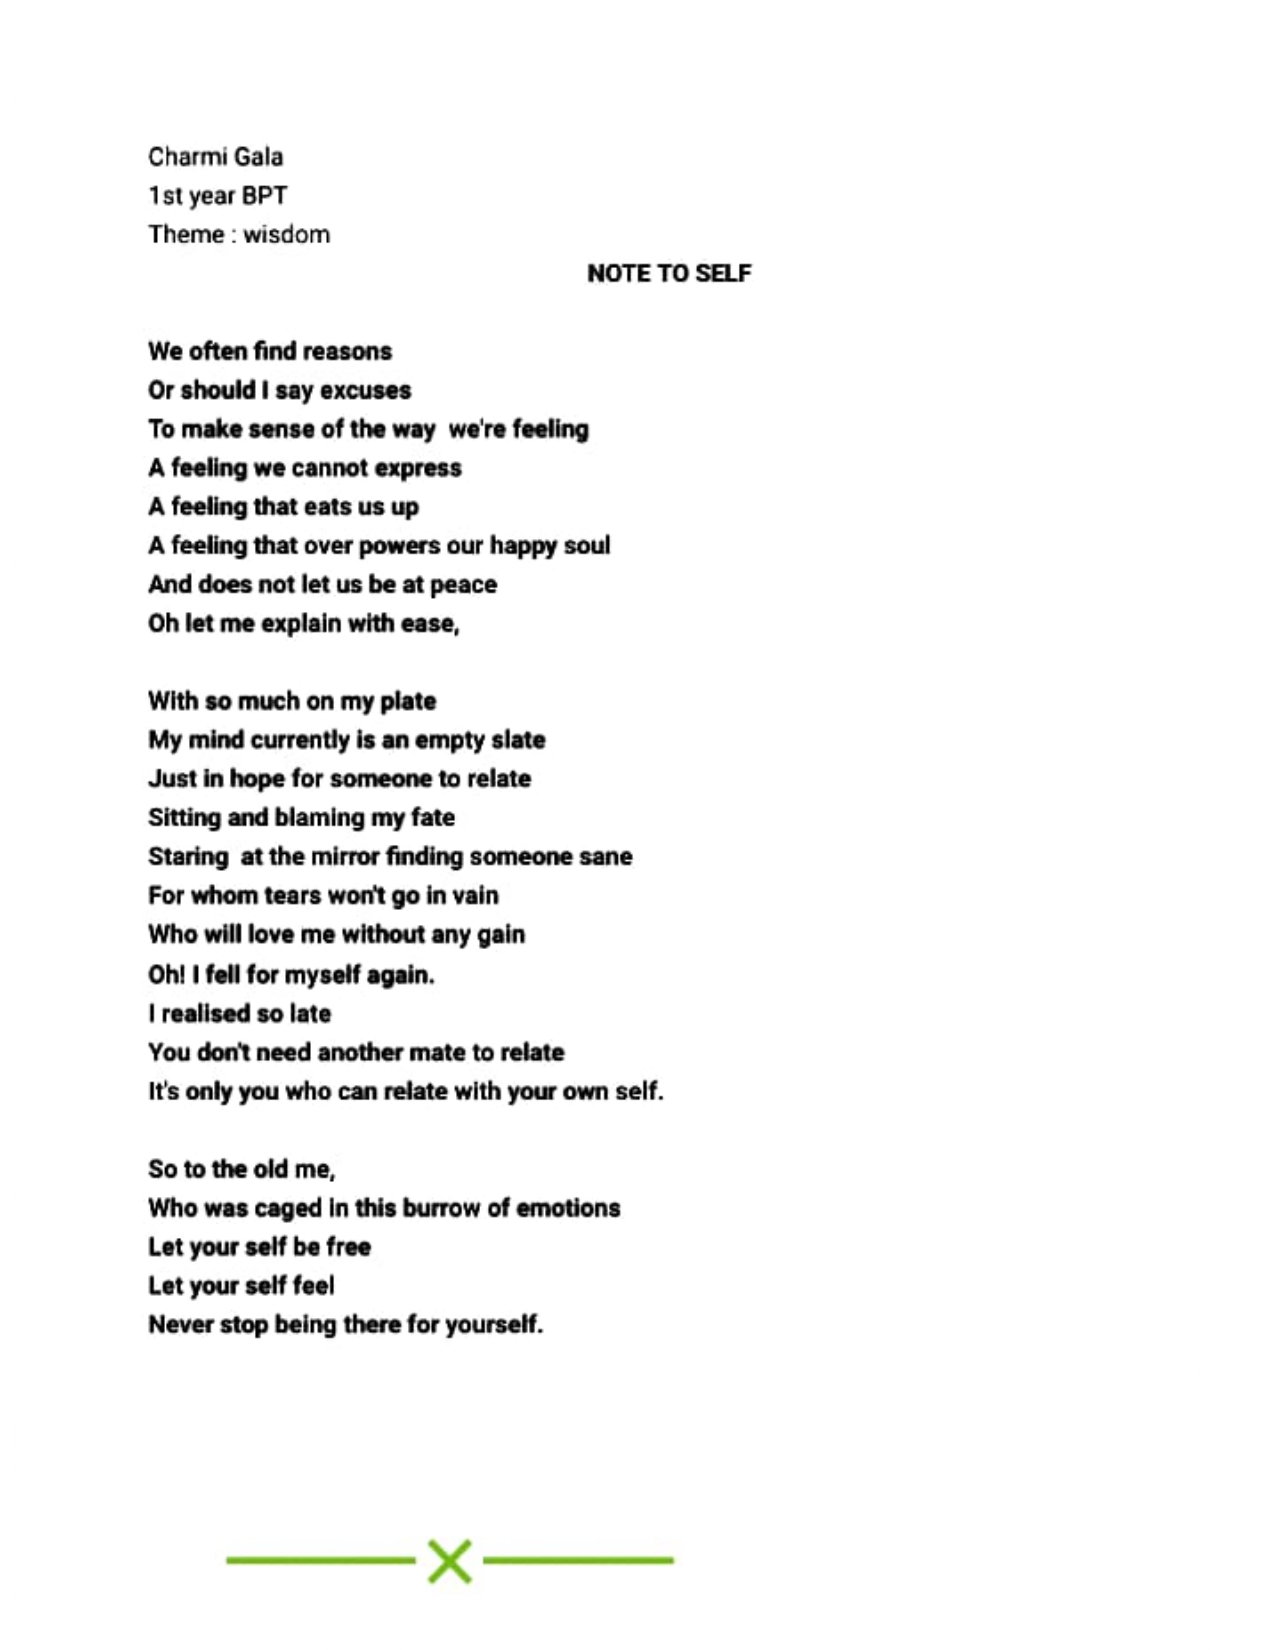 Poem on Wisdom by Charmi Gala,IV BPT student